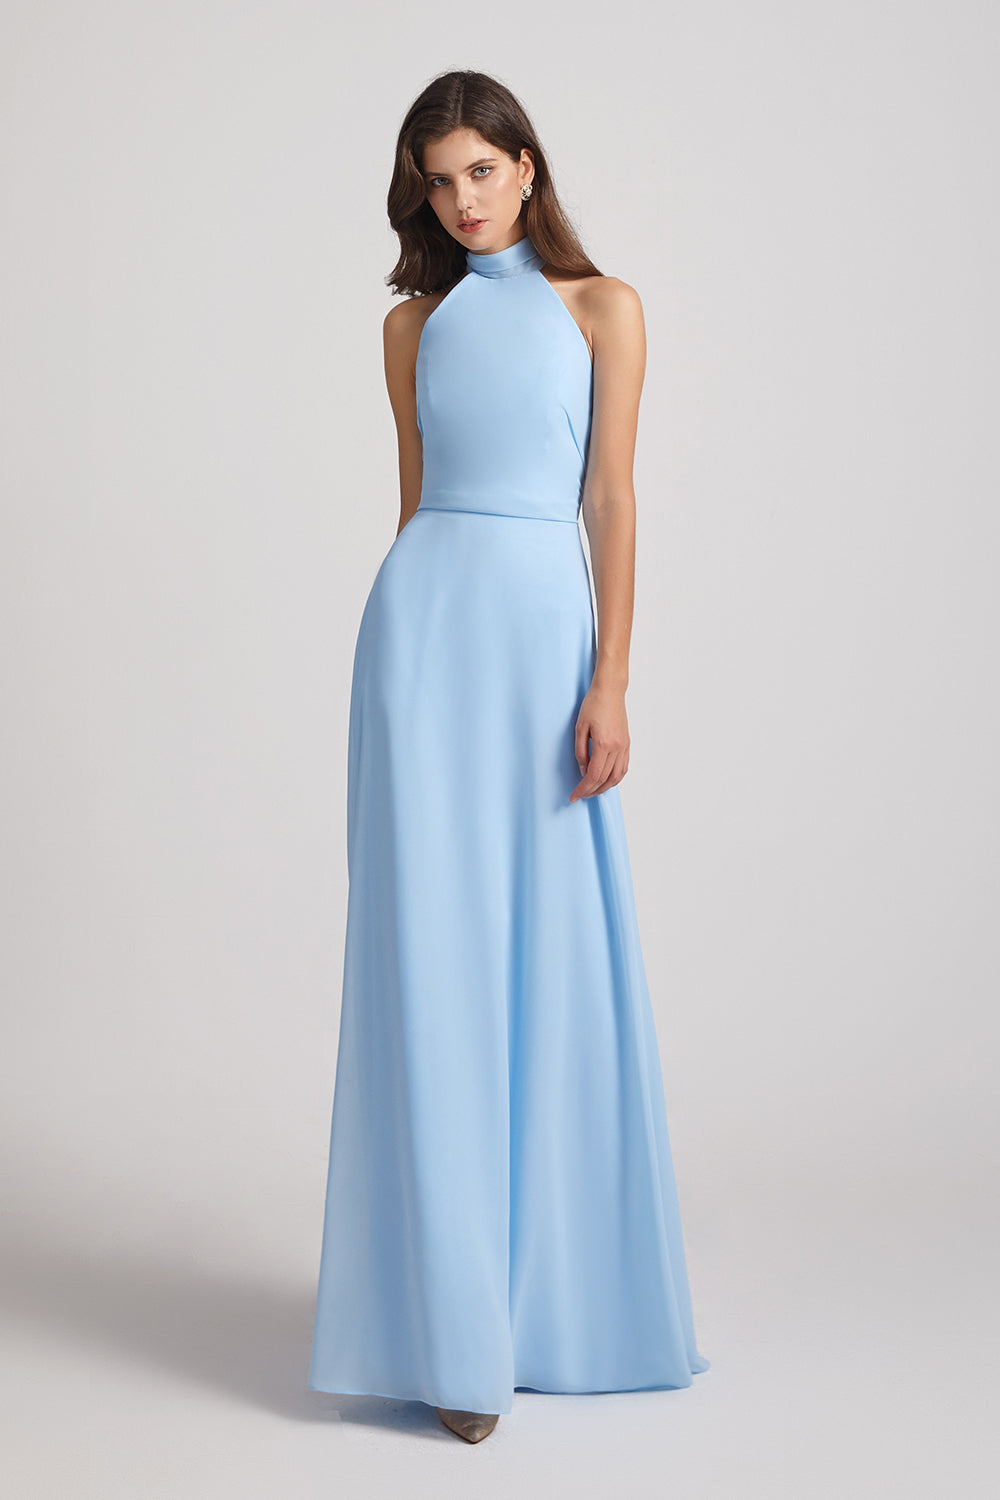 light blue chiffon sleek floor length dresses